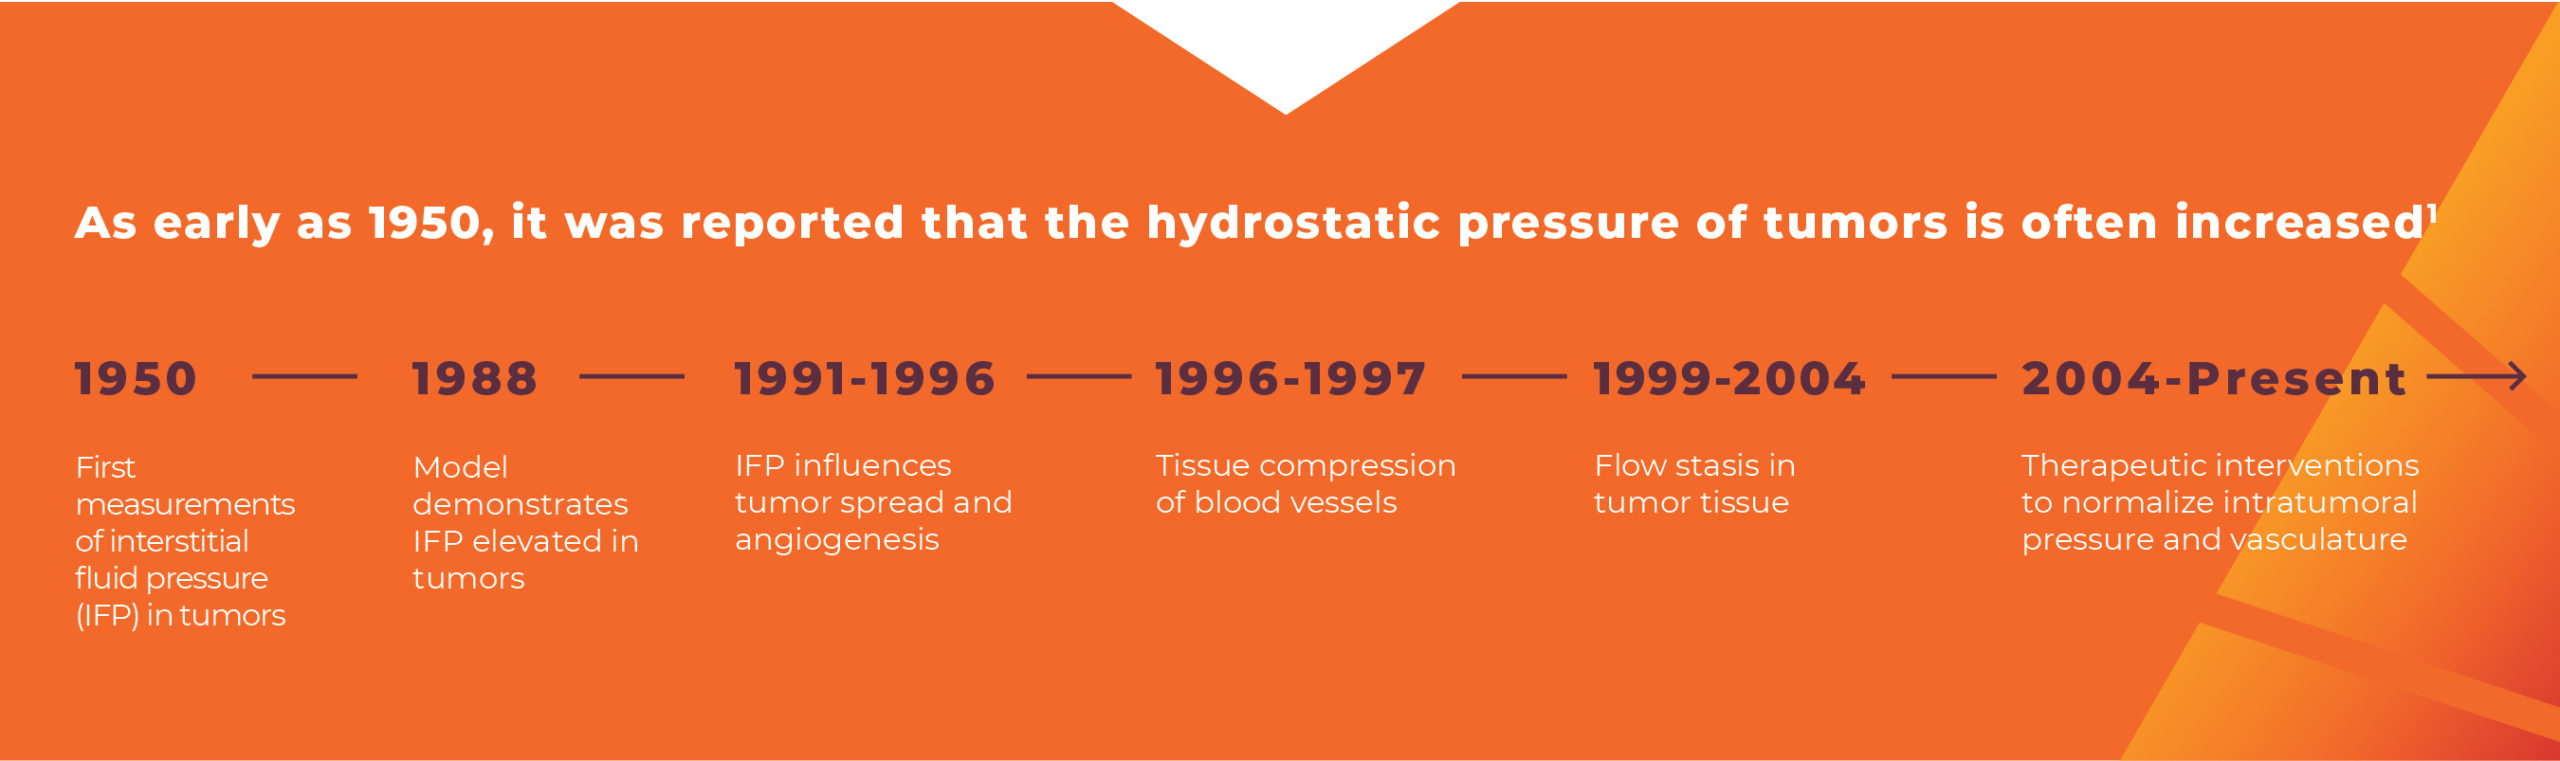 Timeline of hydrostatic pressure of tumors